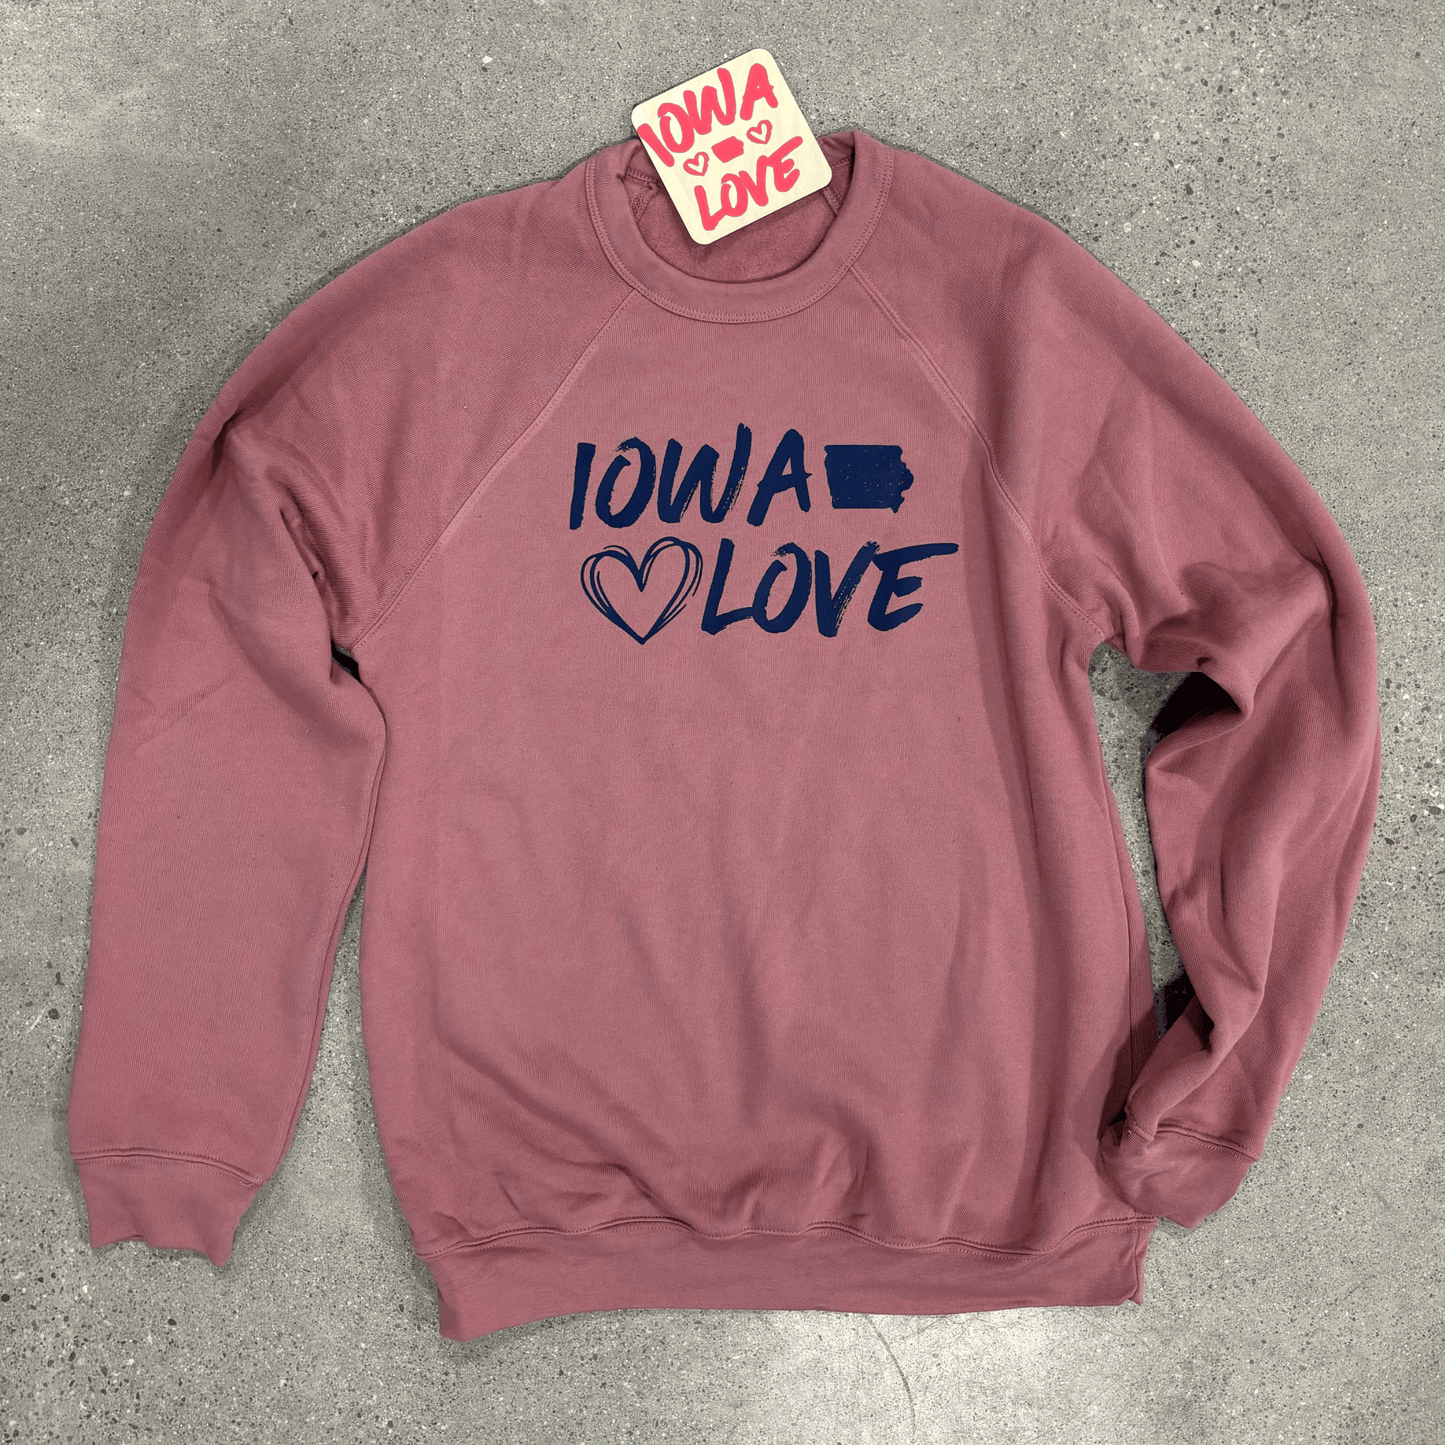 "Iowa love" Fleece Sweatshirt in Mauve